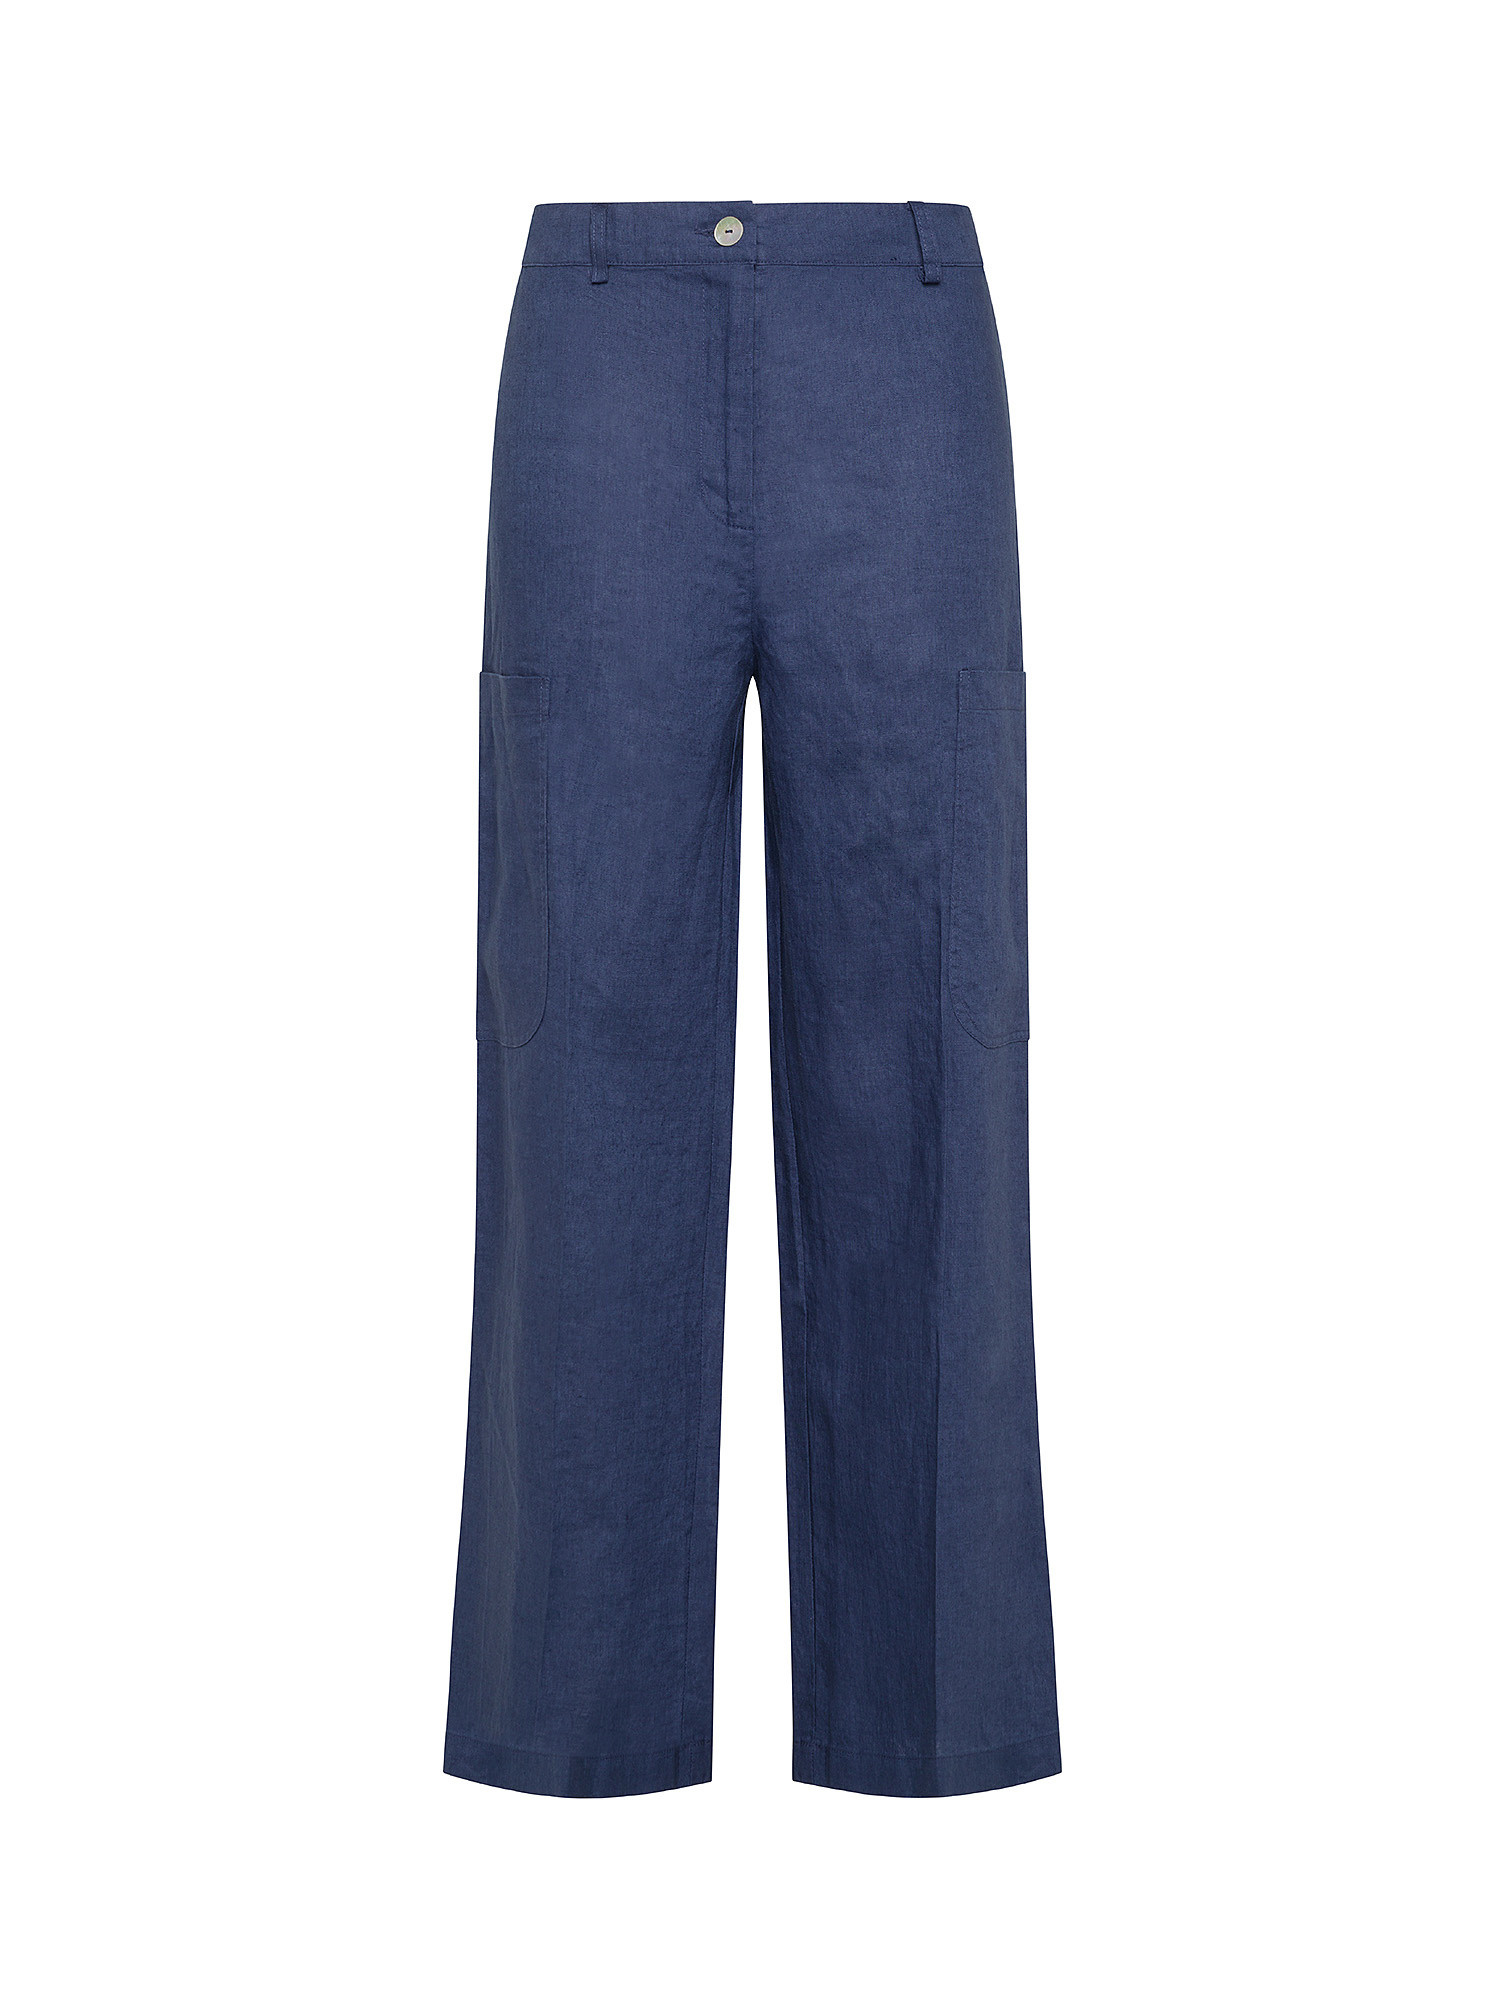 Koan - Linen cargo pants, Blue, large image number 0